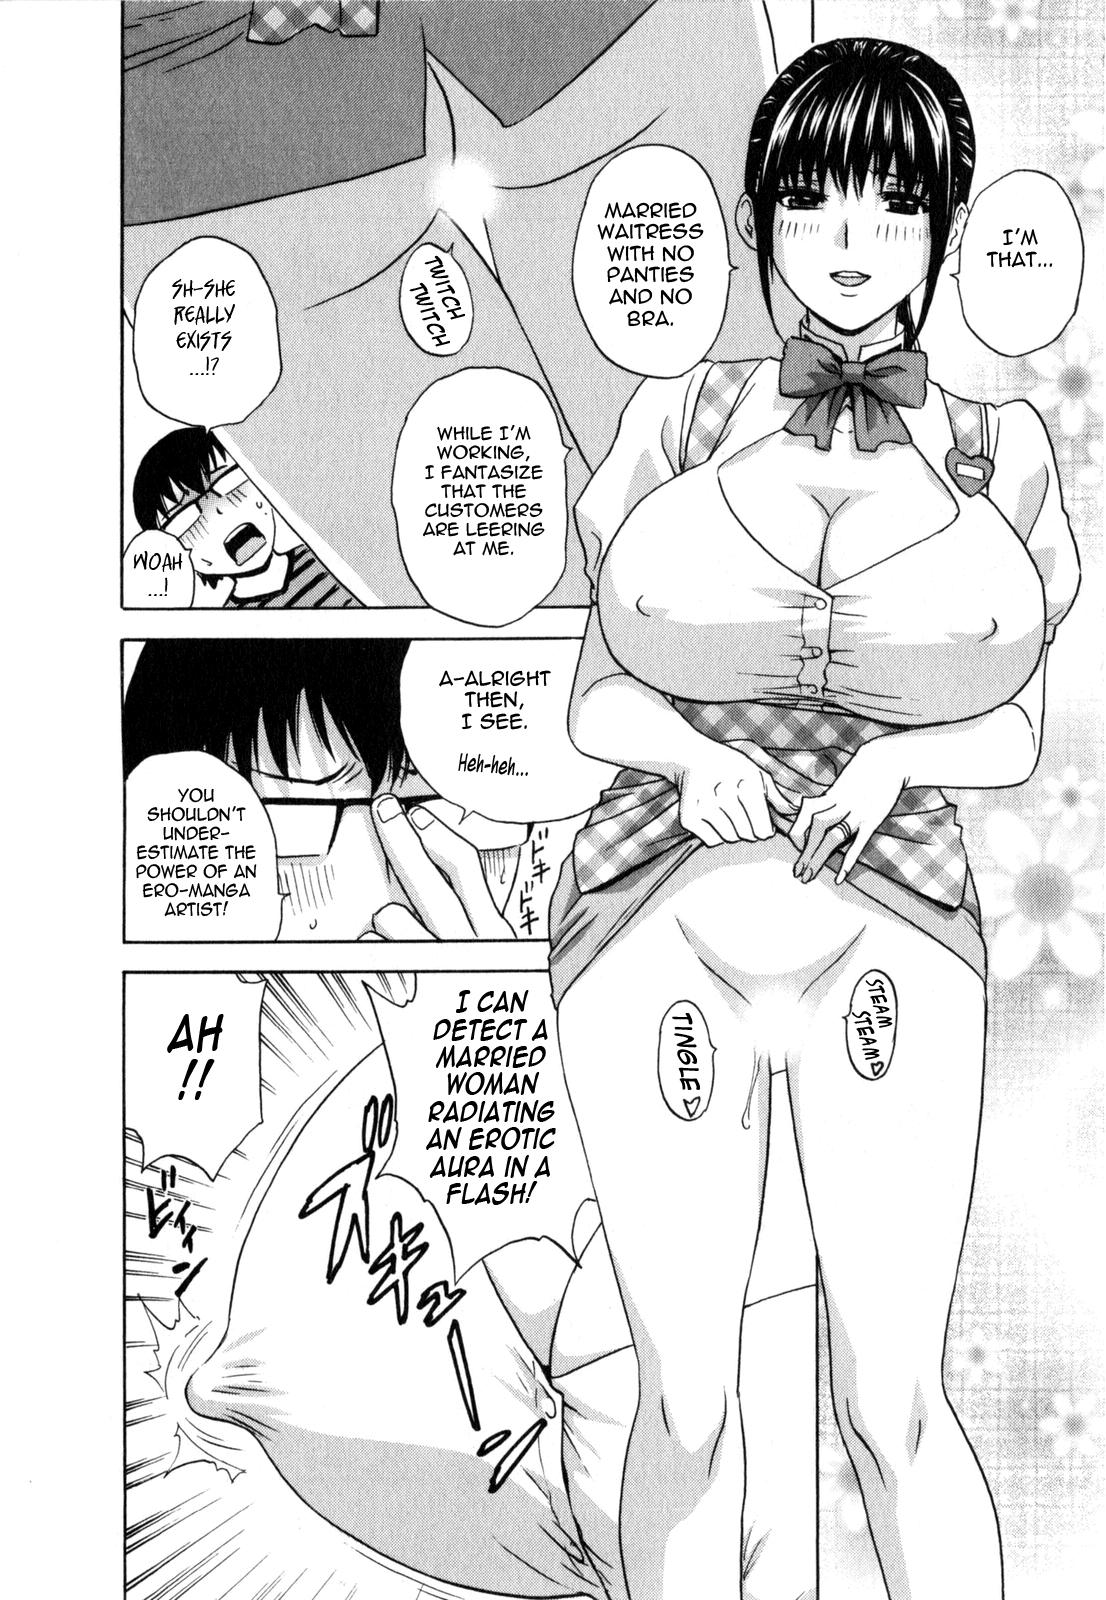 [Hidemaru] Life with Married Women Just Like a Manga 2 - Ch. 1-7 [English] {Tadanohito} 115